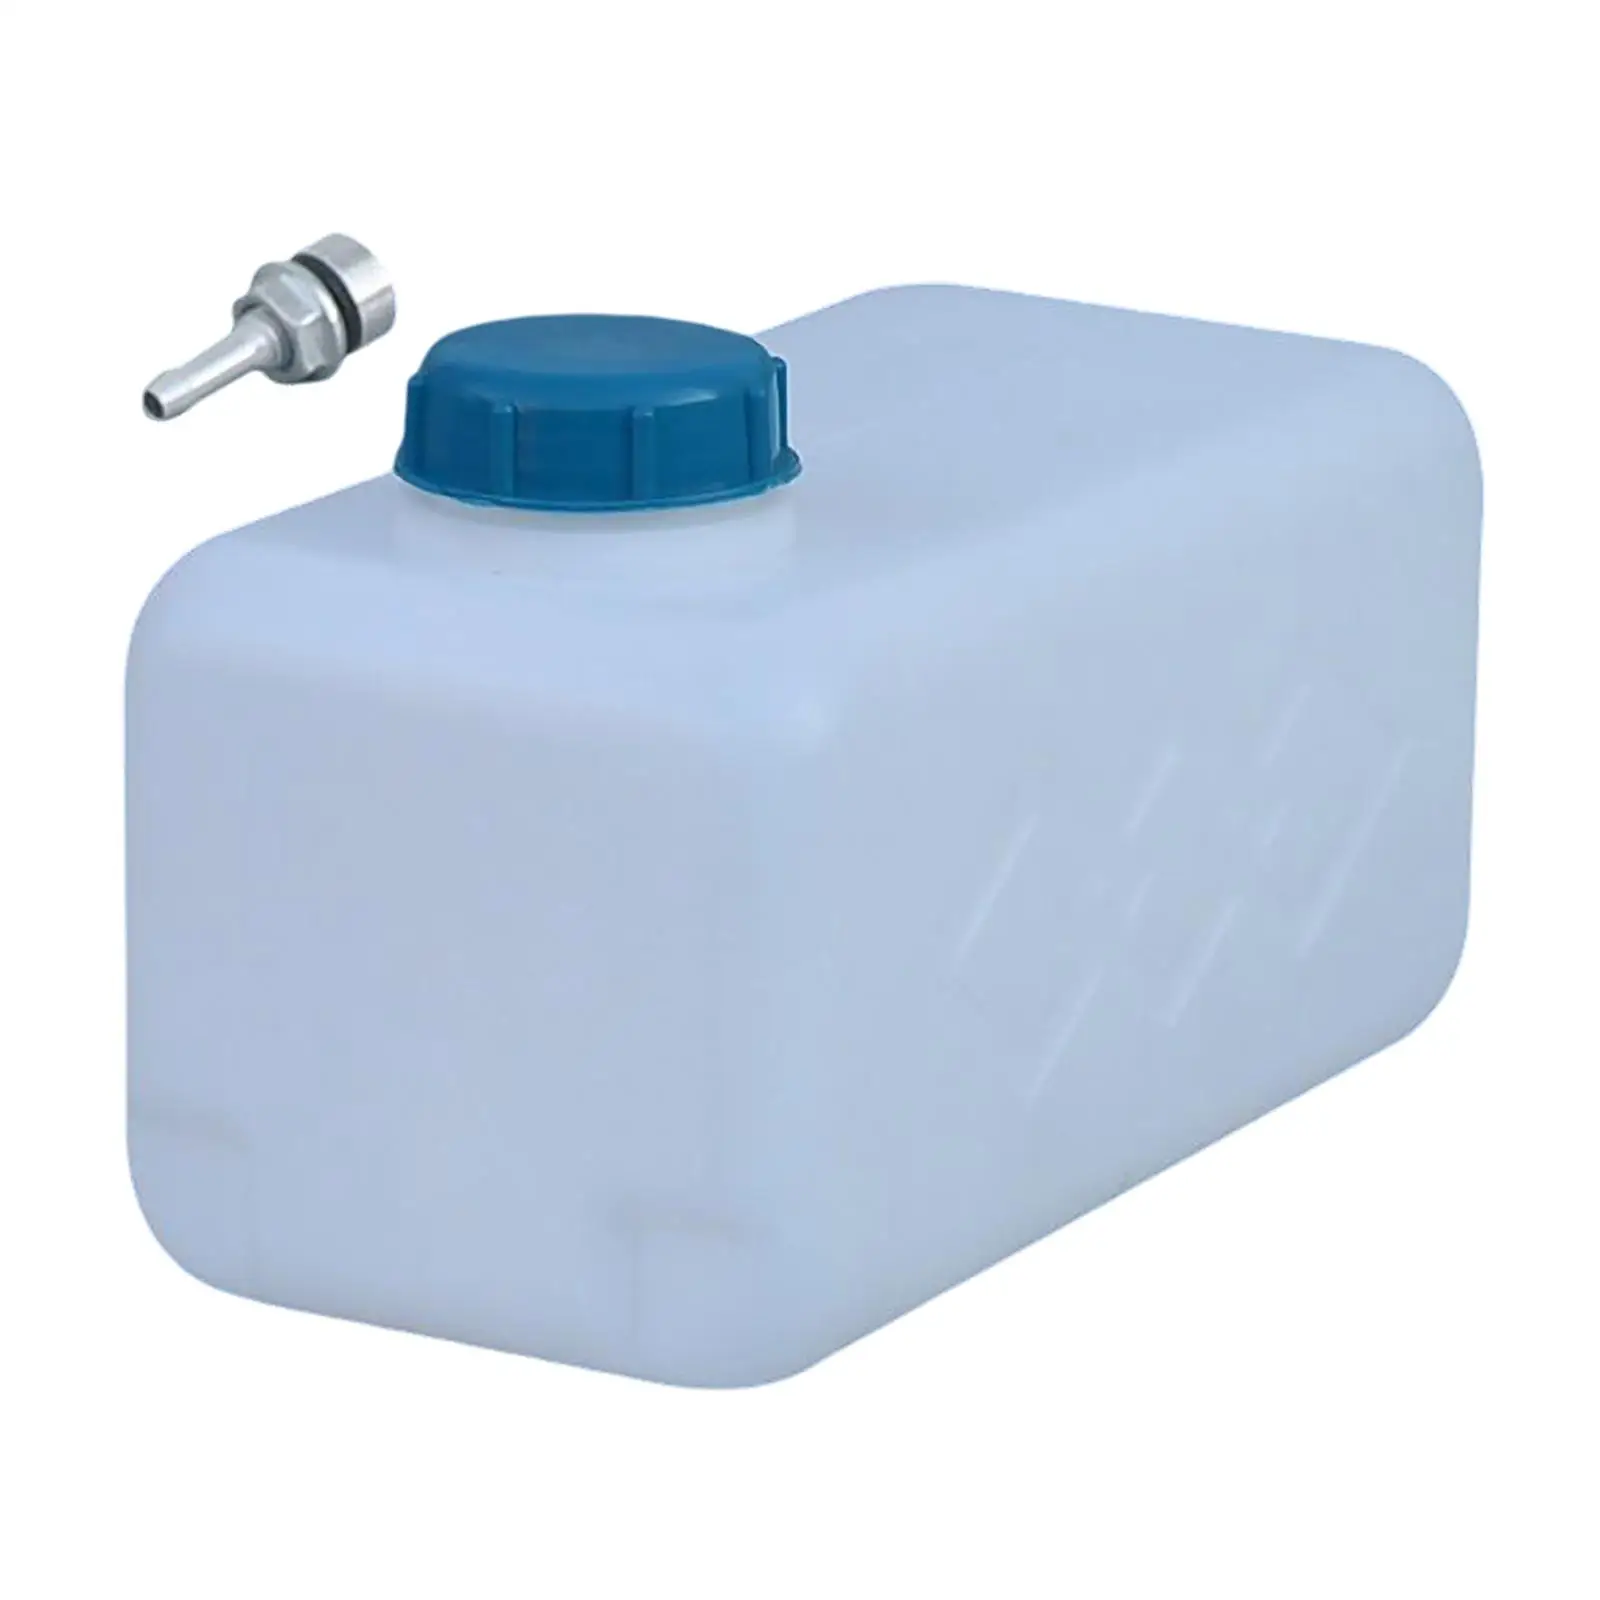 Plastic Fuel Oil Gasoline Tank for Gasoline Car Air Parking Heater 5L